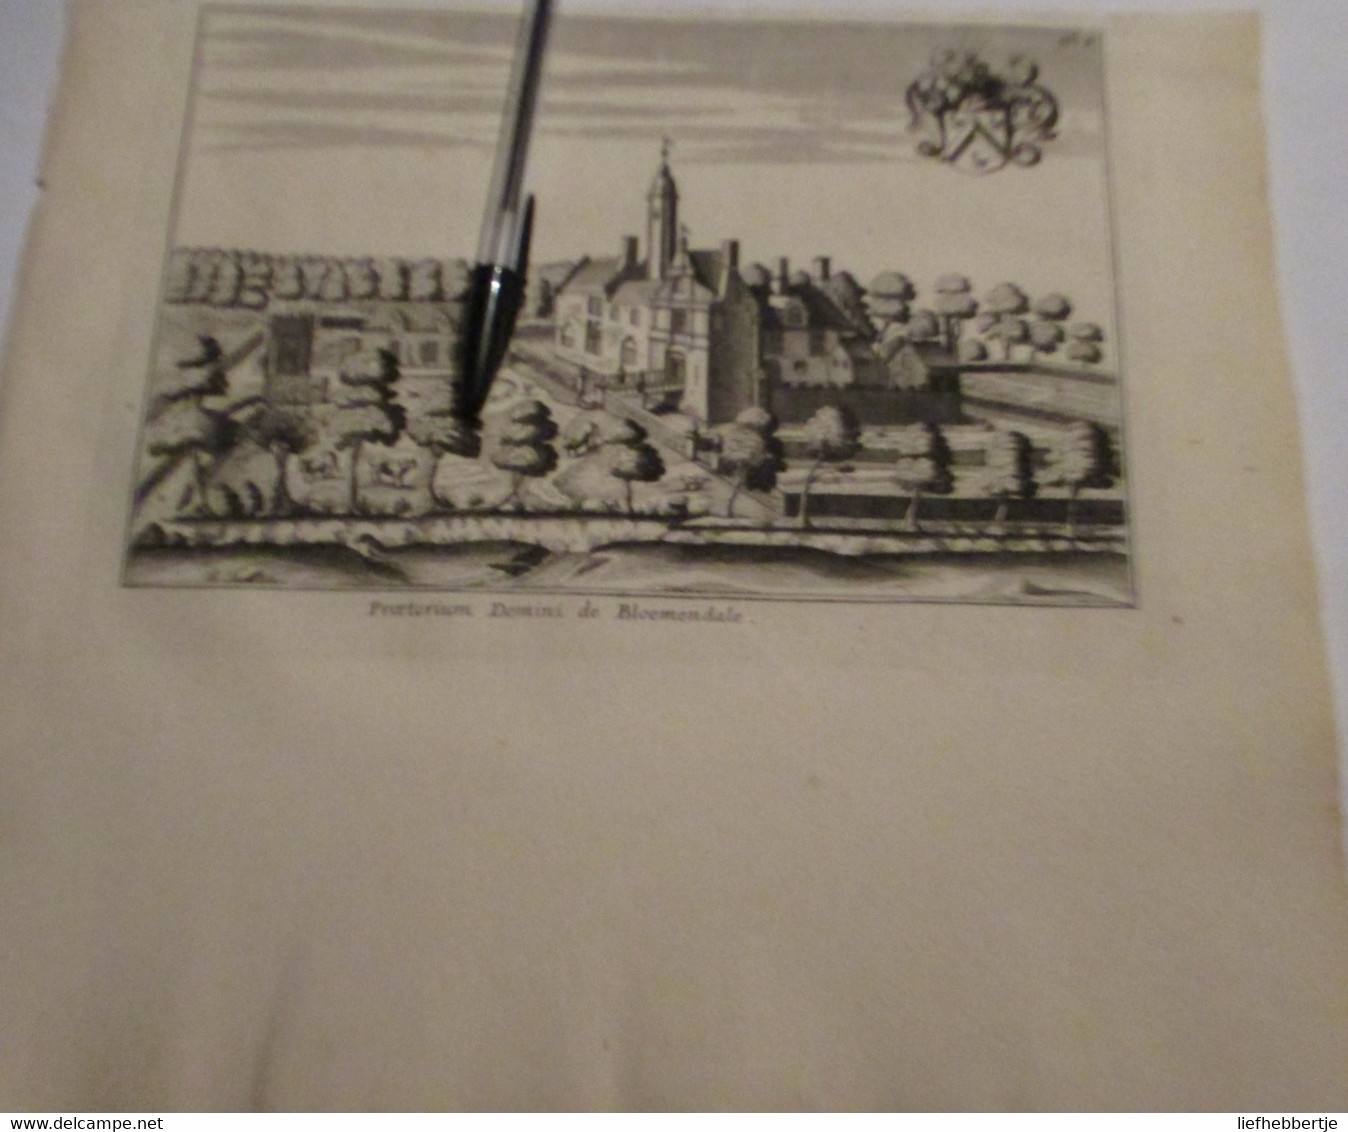 Bloemendale In Beernem - Oude Kaart Uit 1735 - Cartes Topographiques